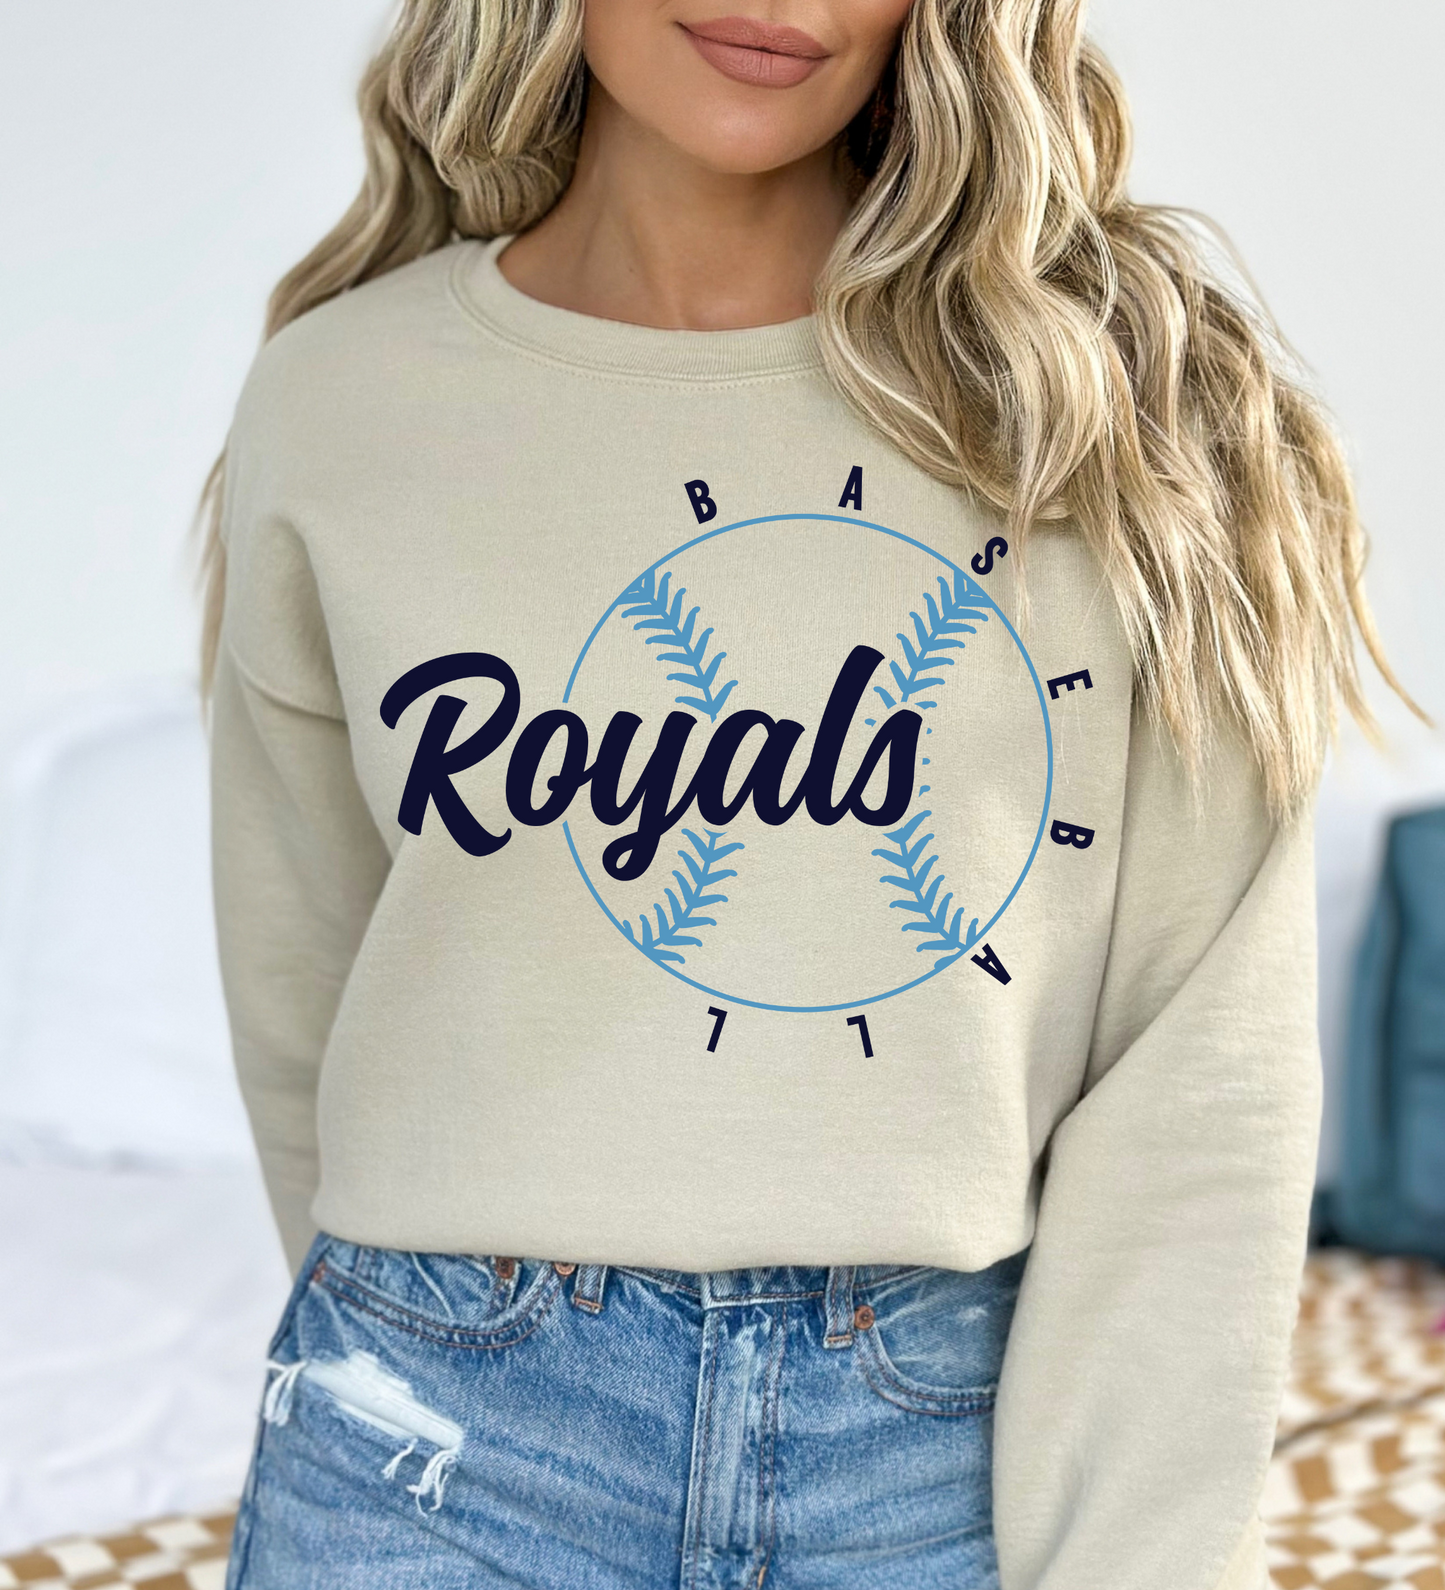 Royals Baseball Single (Gildan)